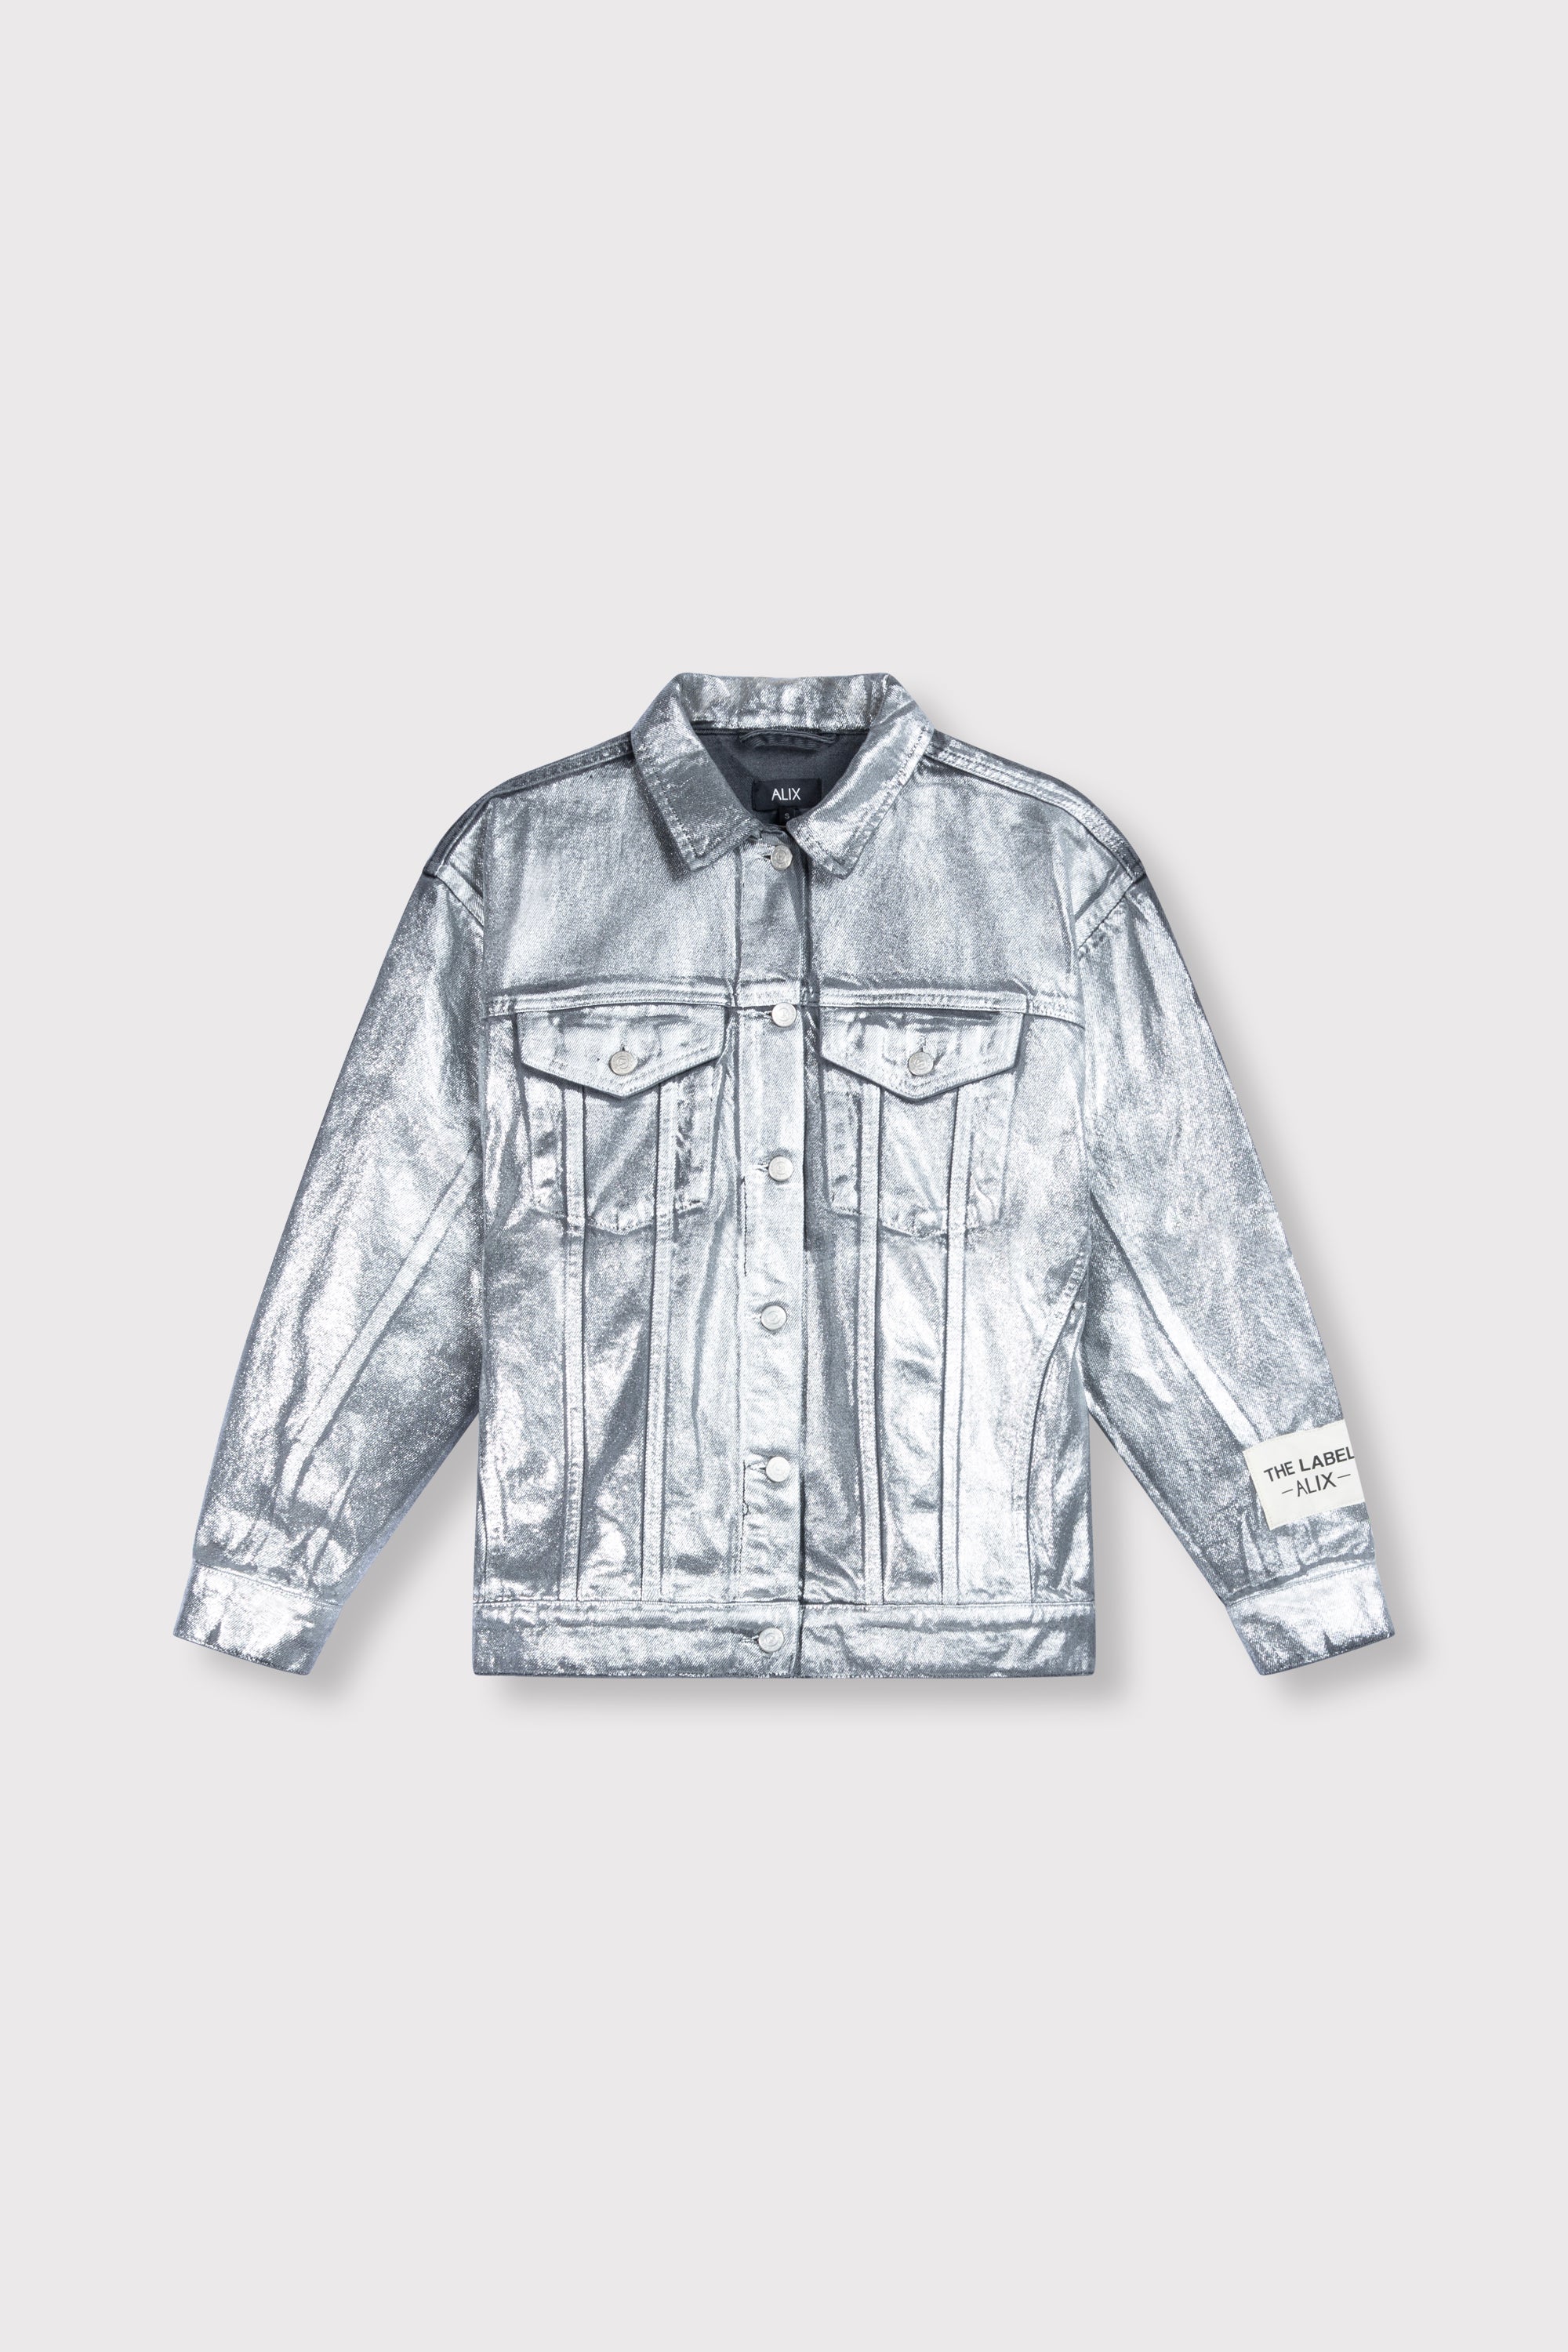 Silver denim jacket